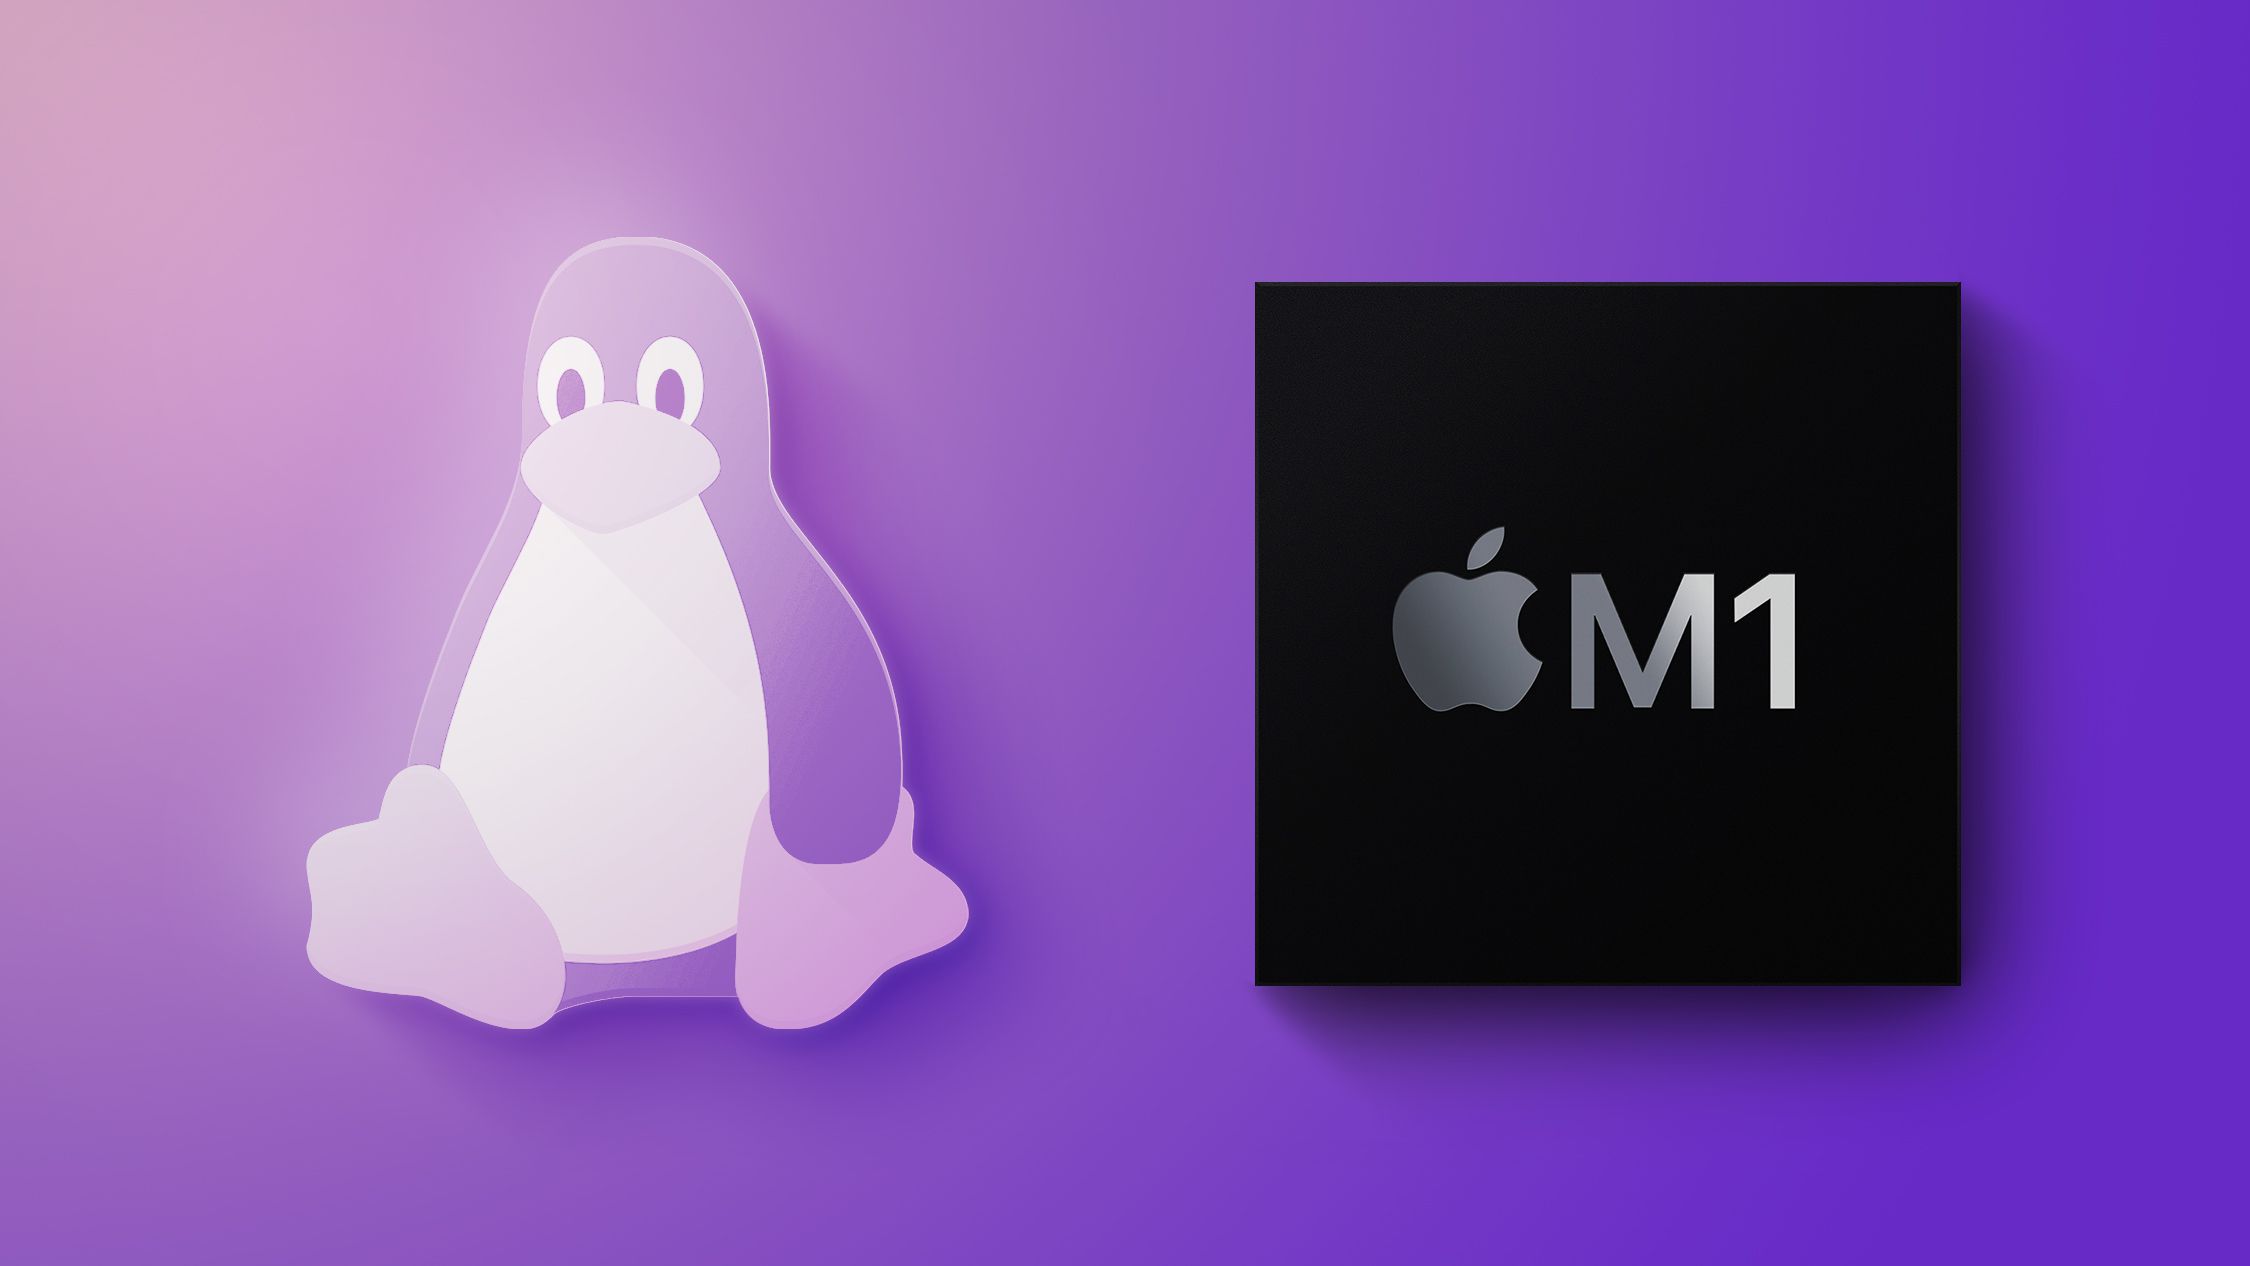 Ubuntu Linux is now running on M1 Macs